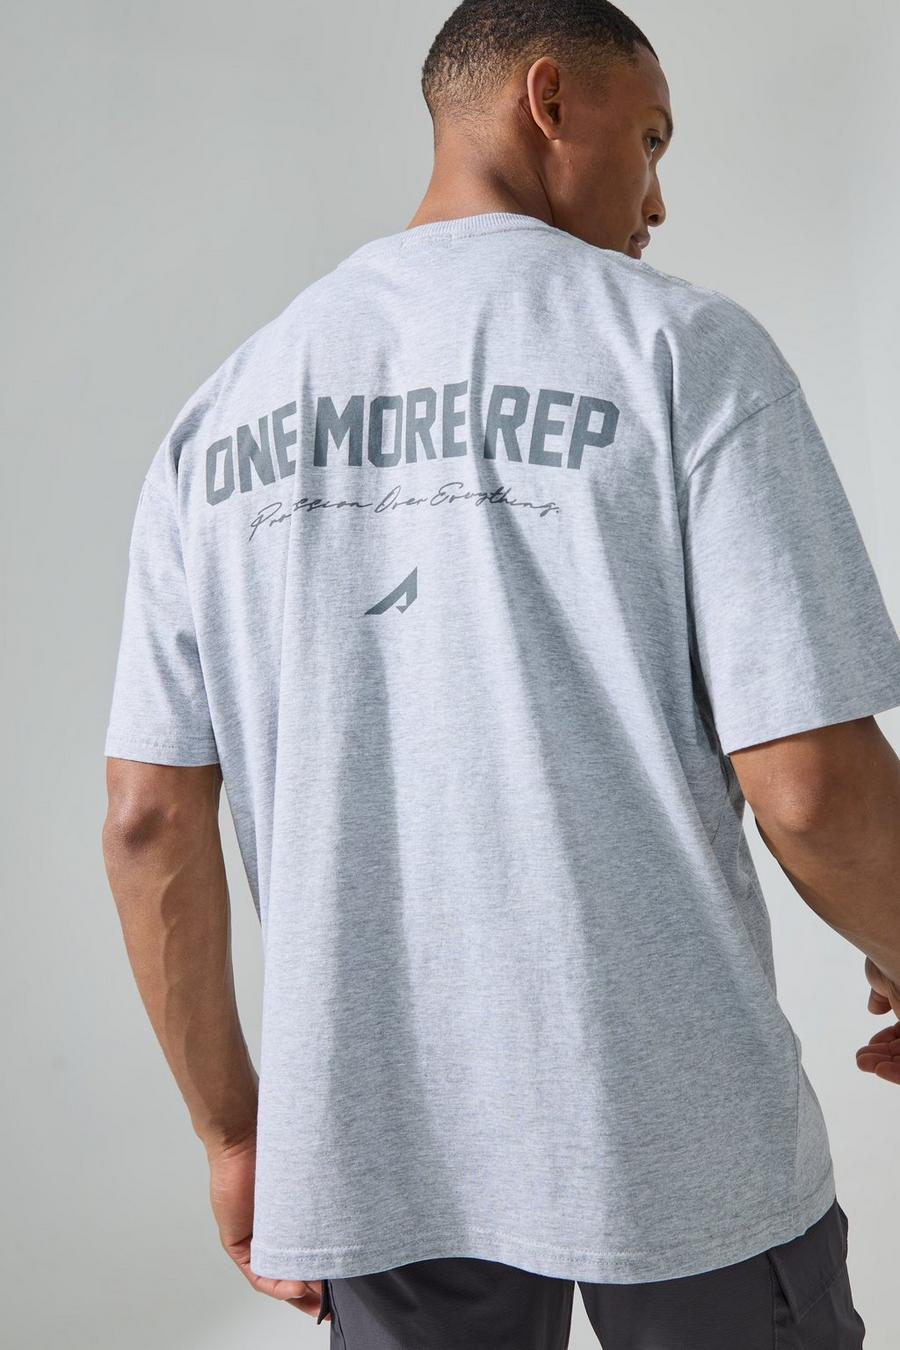 T-shirt oversize Man Active di One More Rep, Grey marl